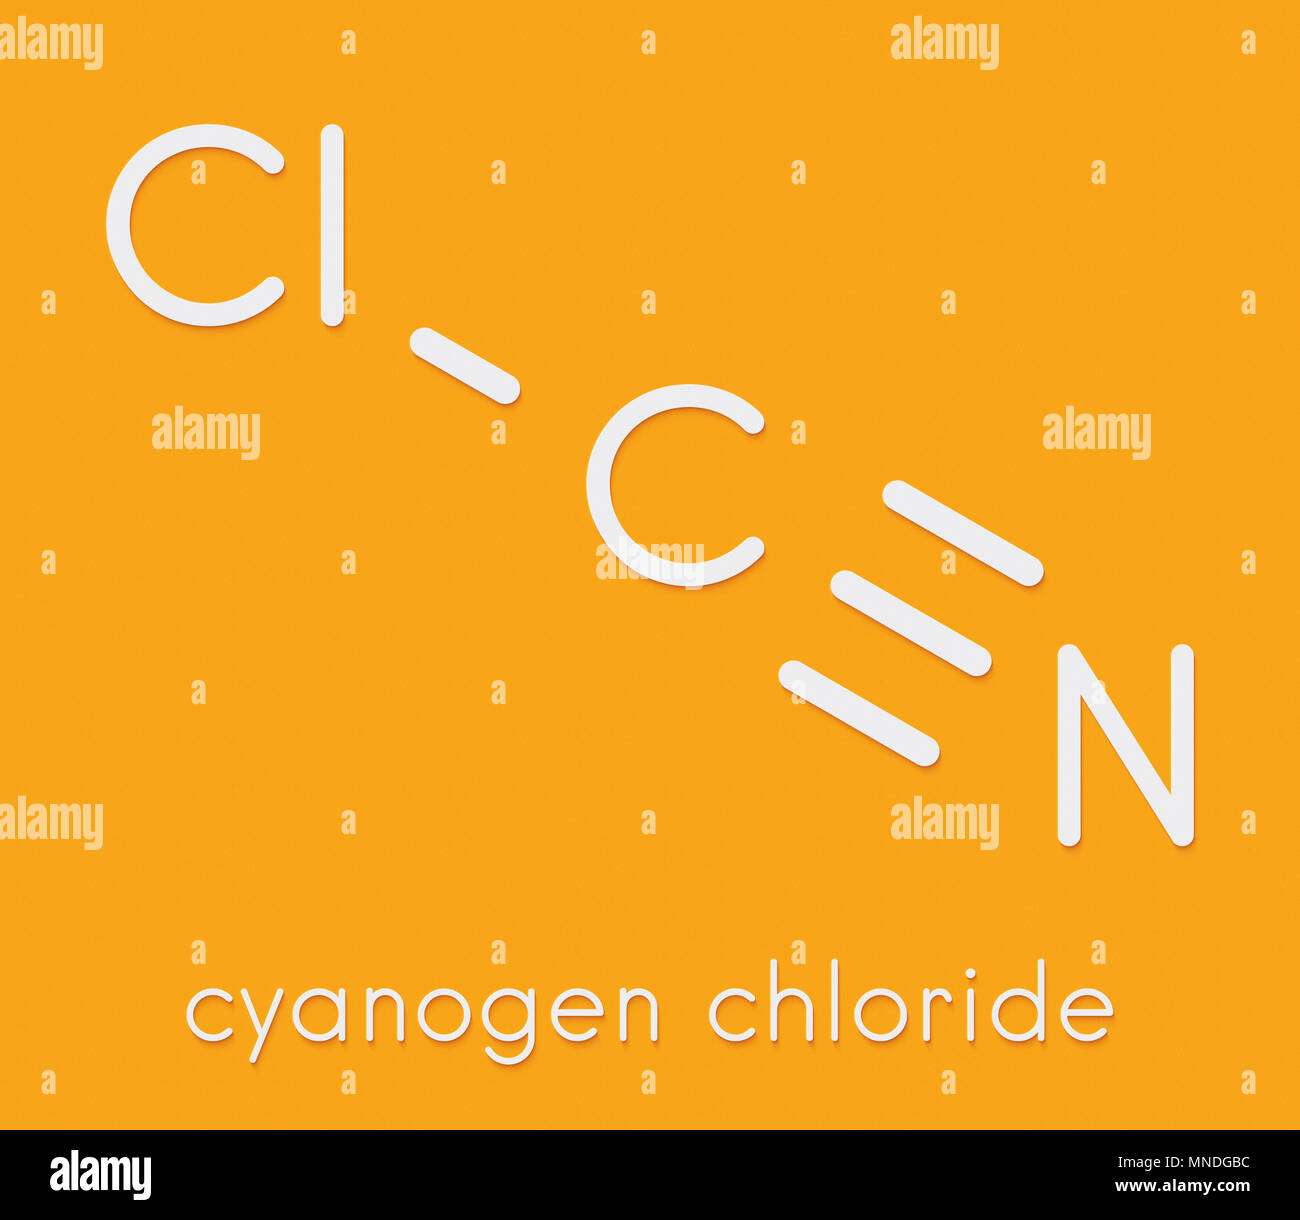 Cyanogen chloride toxic gas molecule. Skeletal formula Stock Photo - Alamy